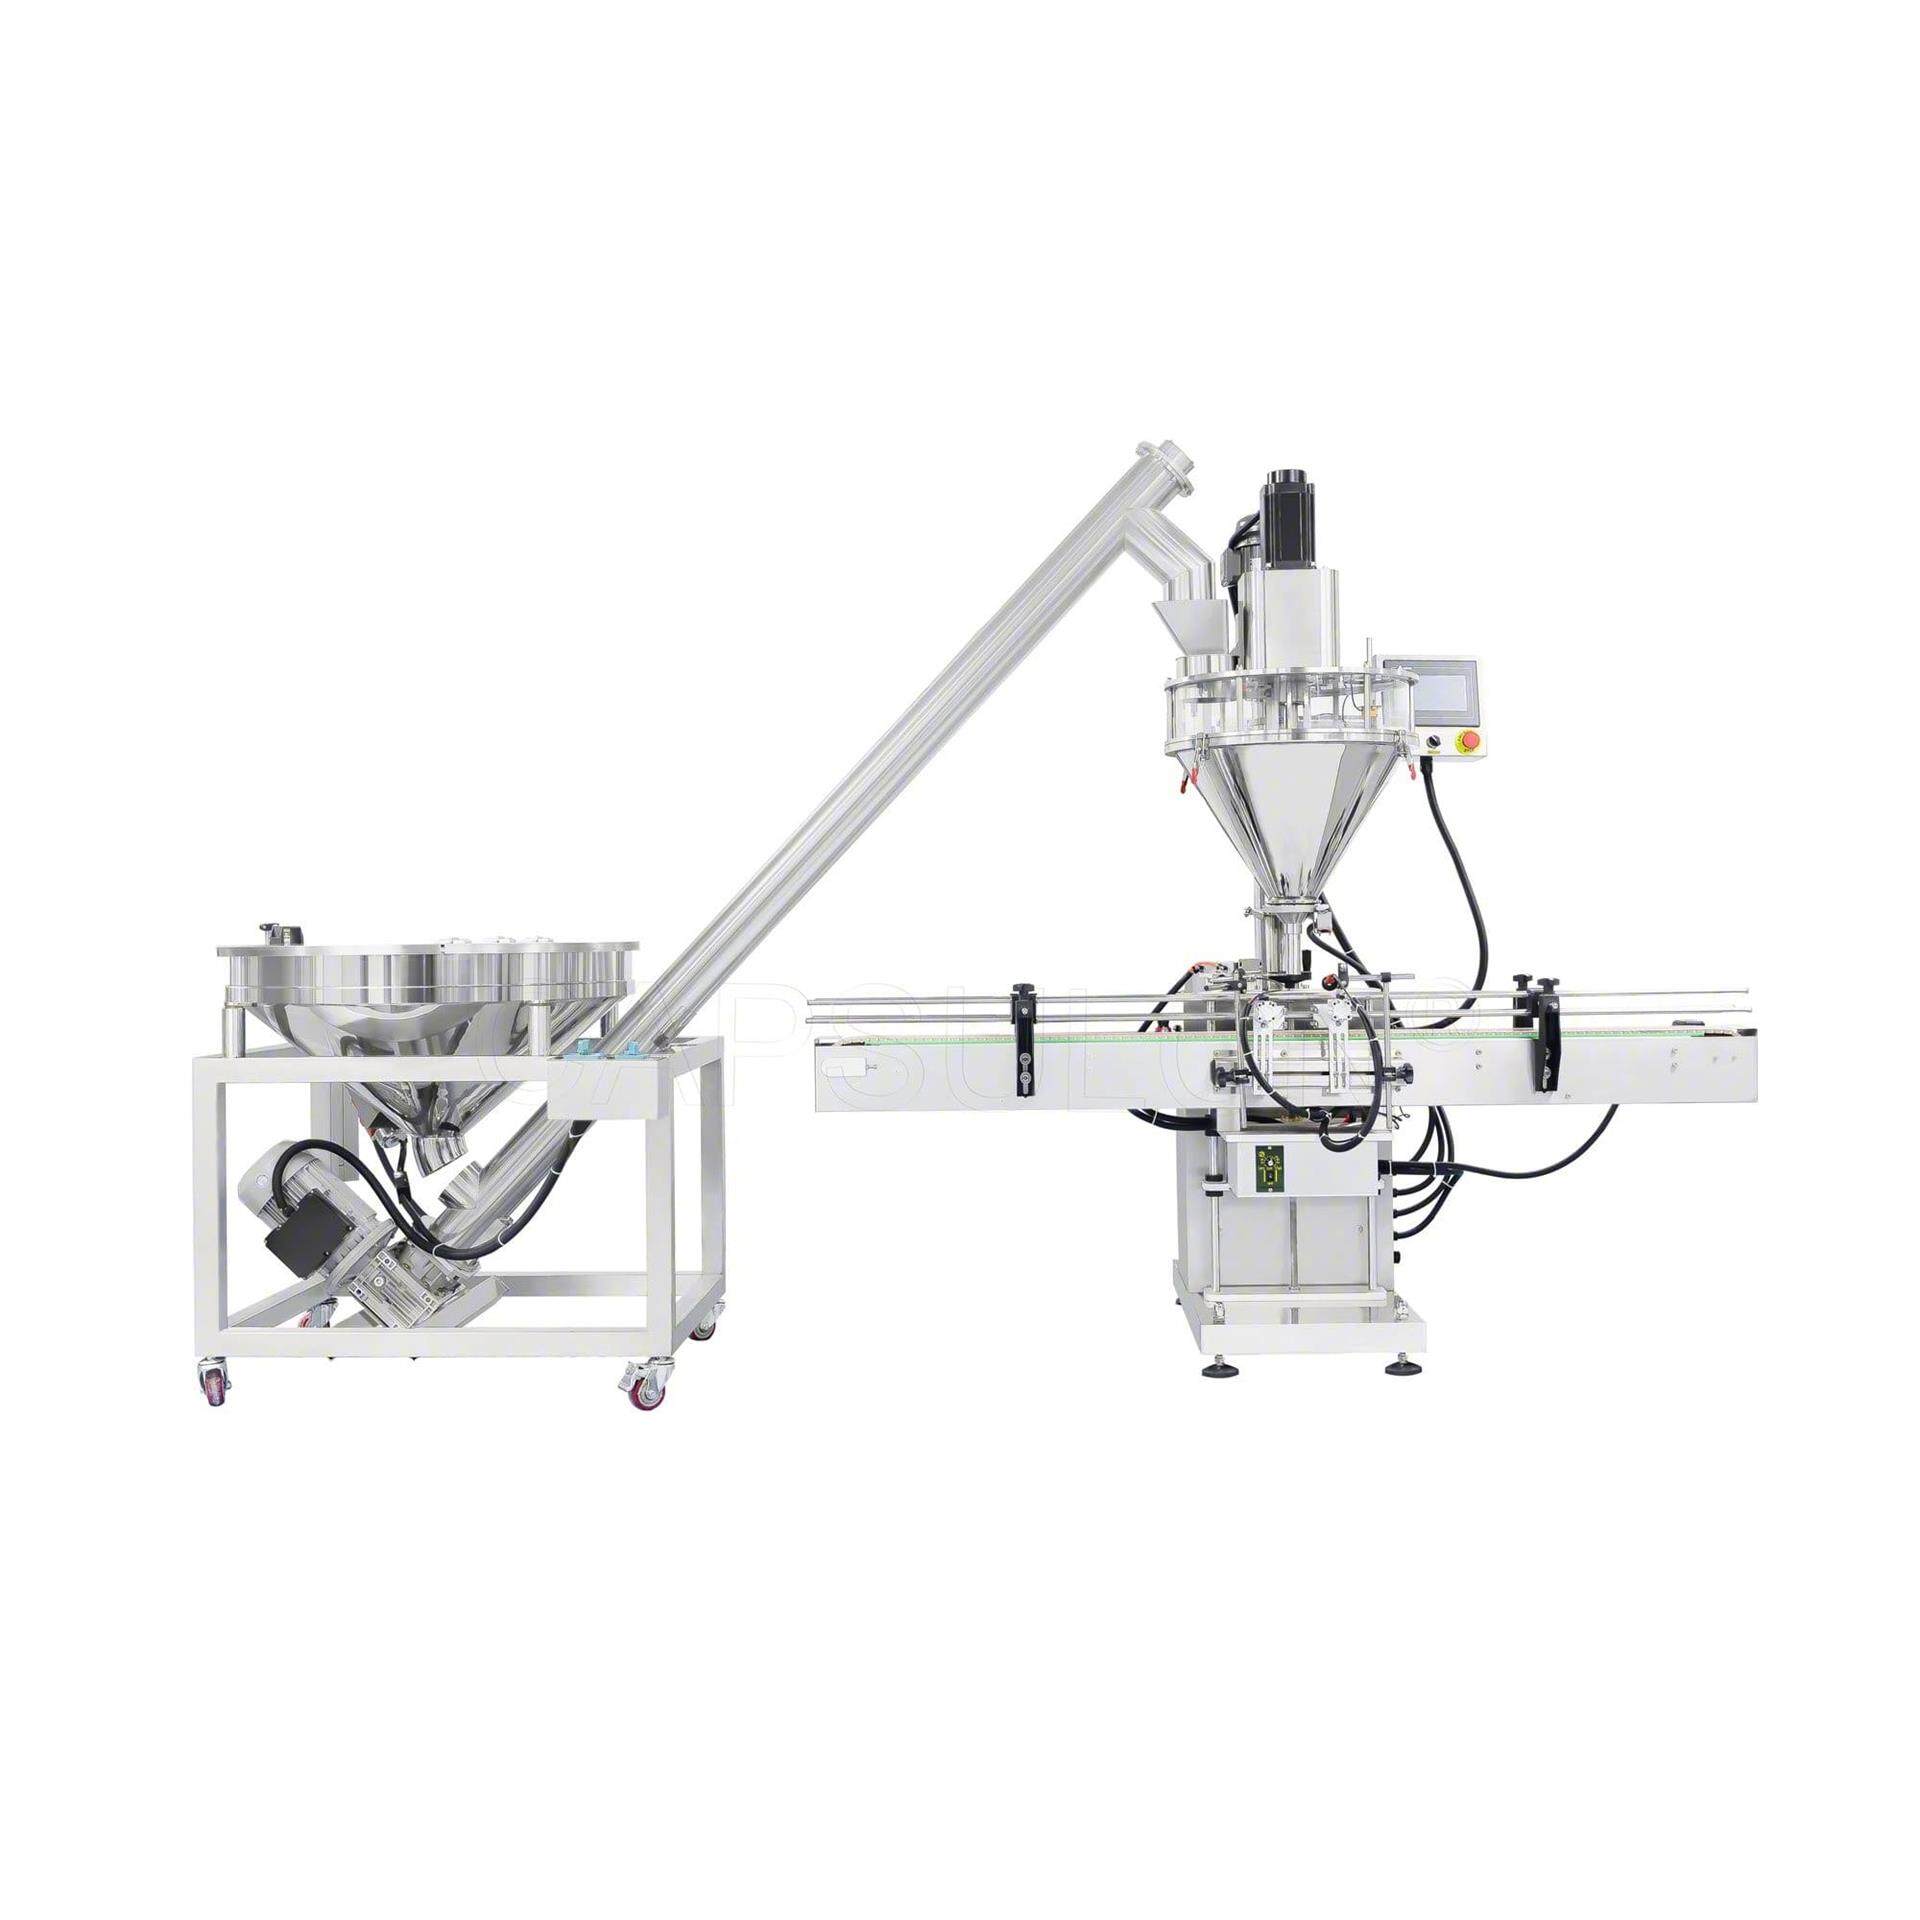 China Powder Mixer Wheat Flour Blender Machine Manufacturers and